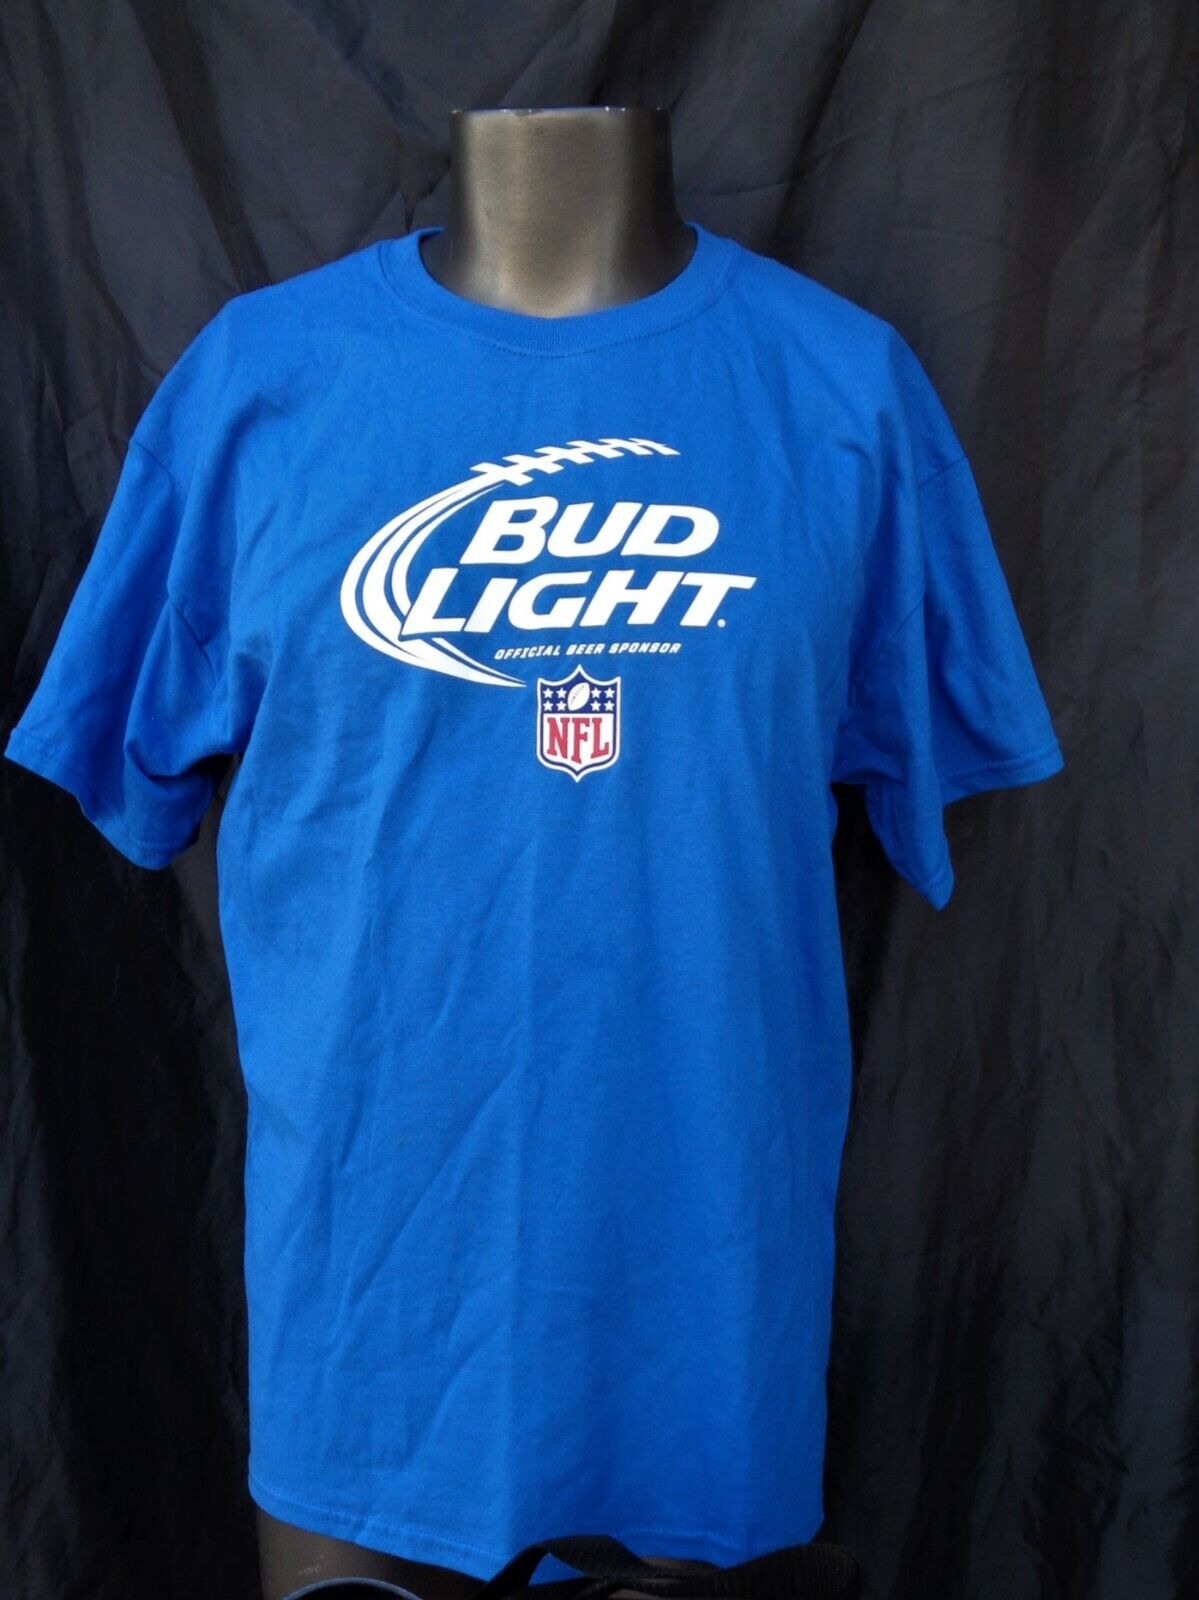 Bud Light  Budweiser (NFL Official Beer sponsor ) X 2 Tee shirts size L/ /L@@k